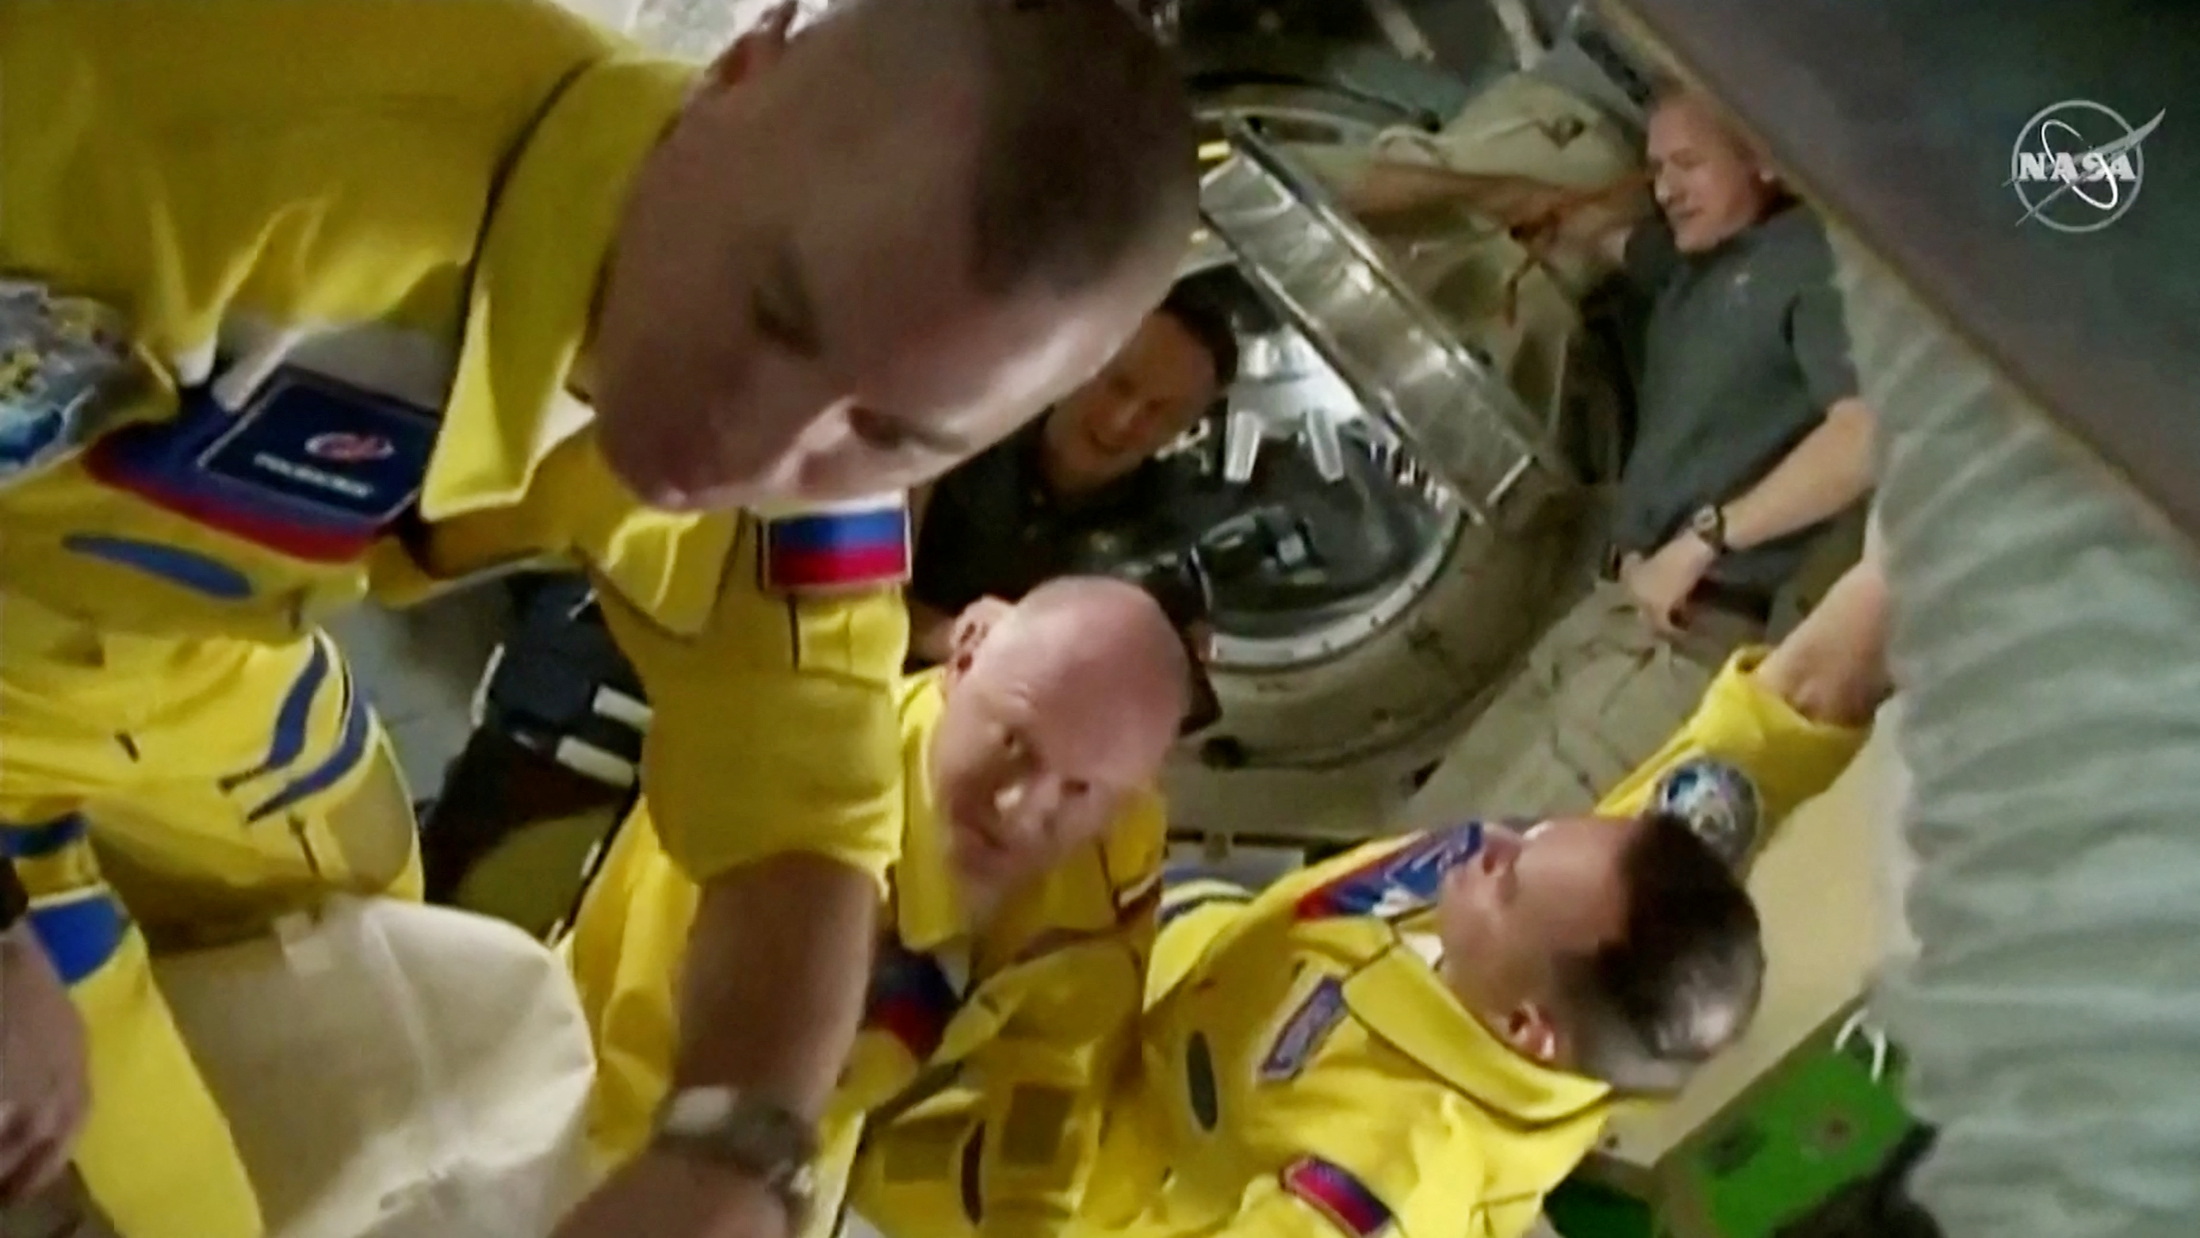 Russia denies cosmonauts wore yellow jumpsuits in sigh of Ukraine invasion